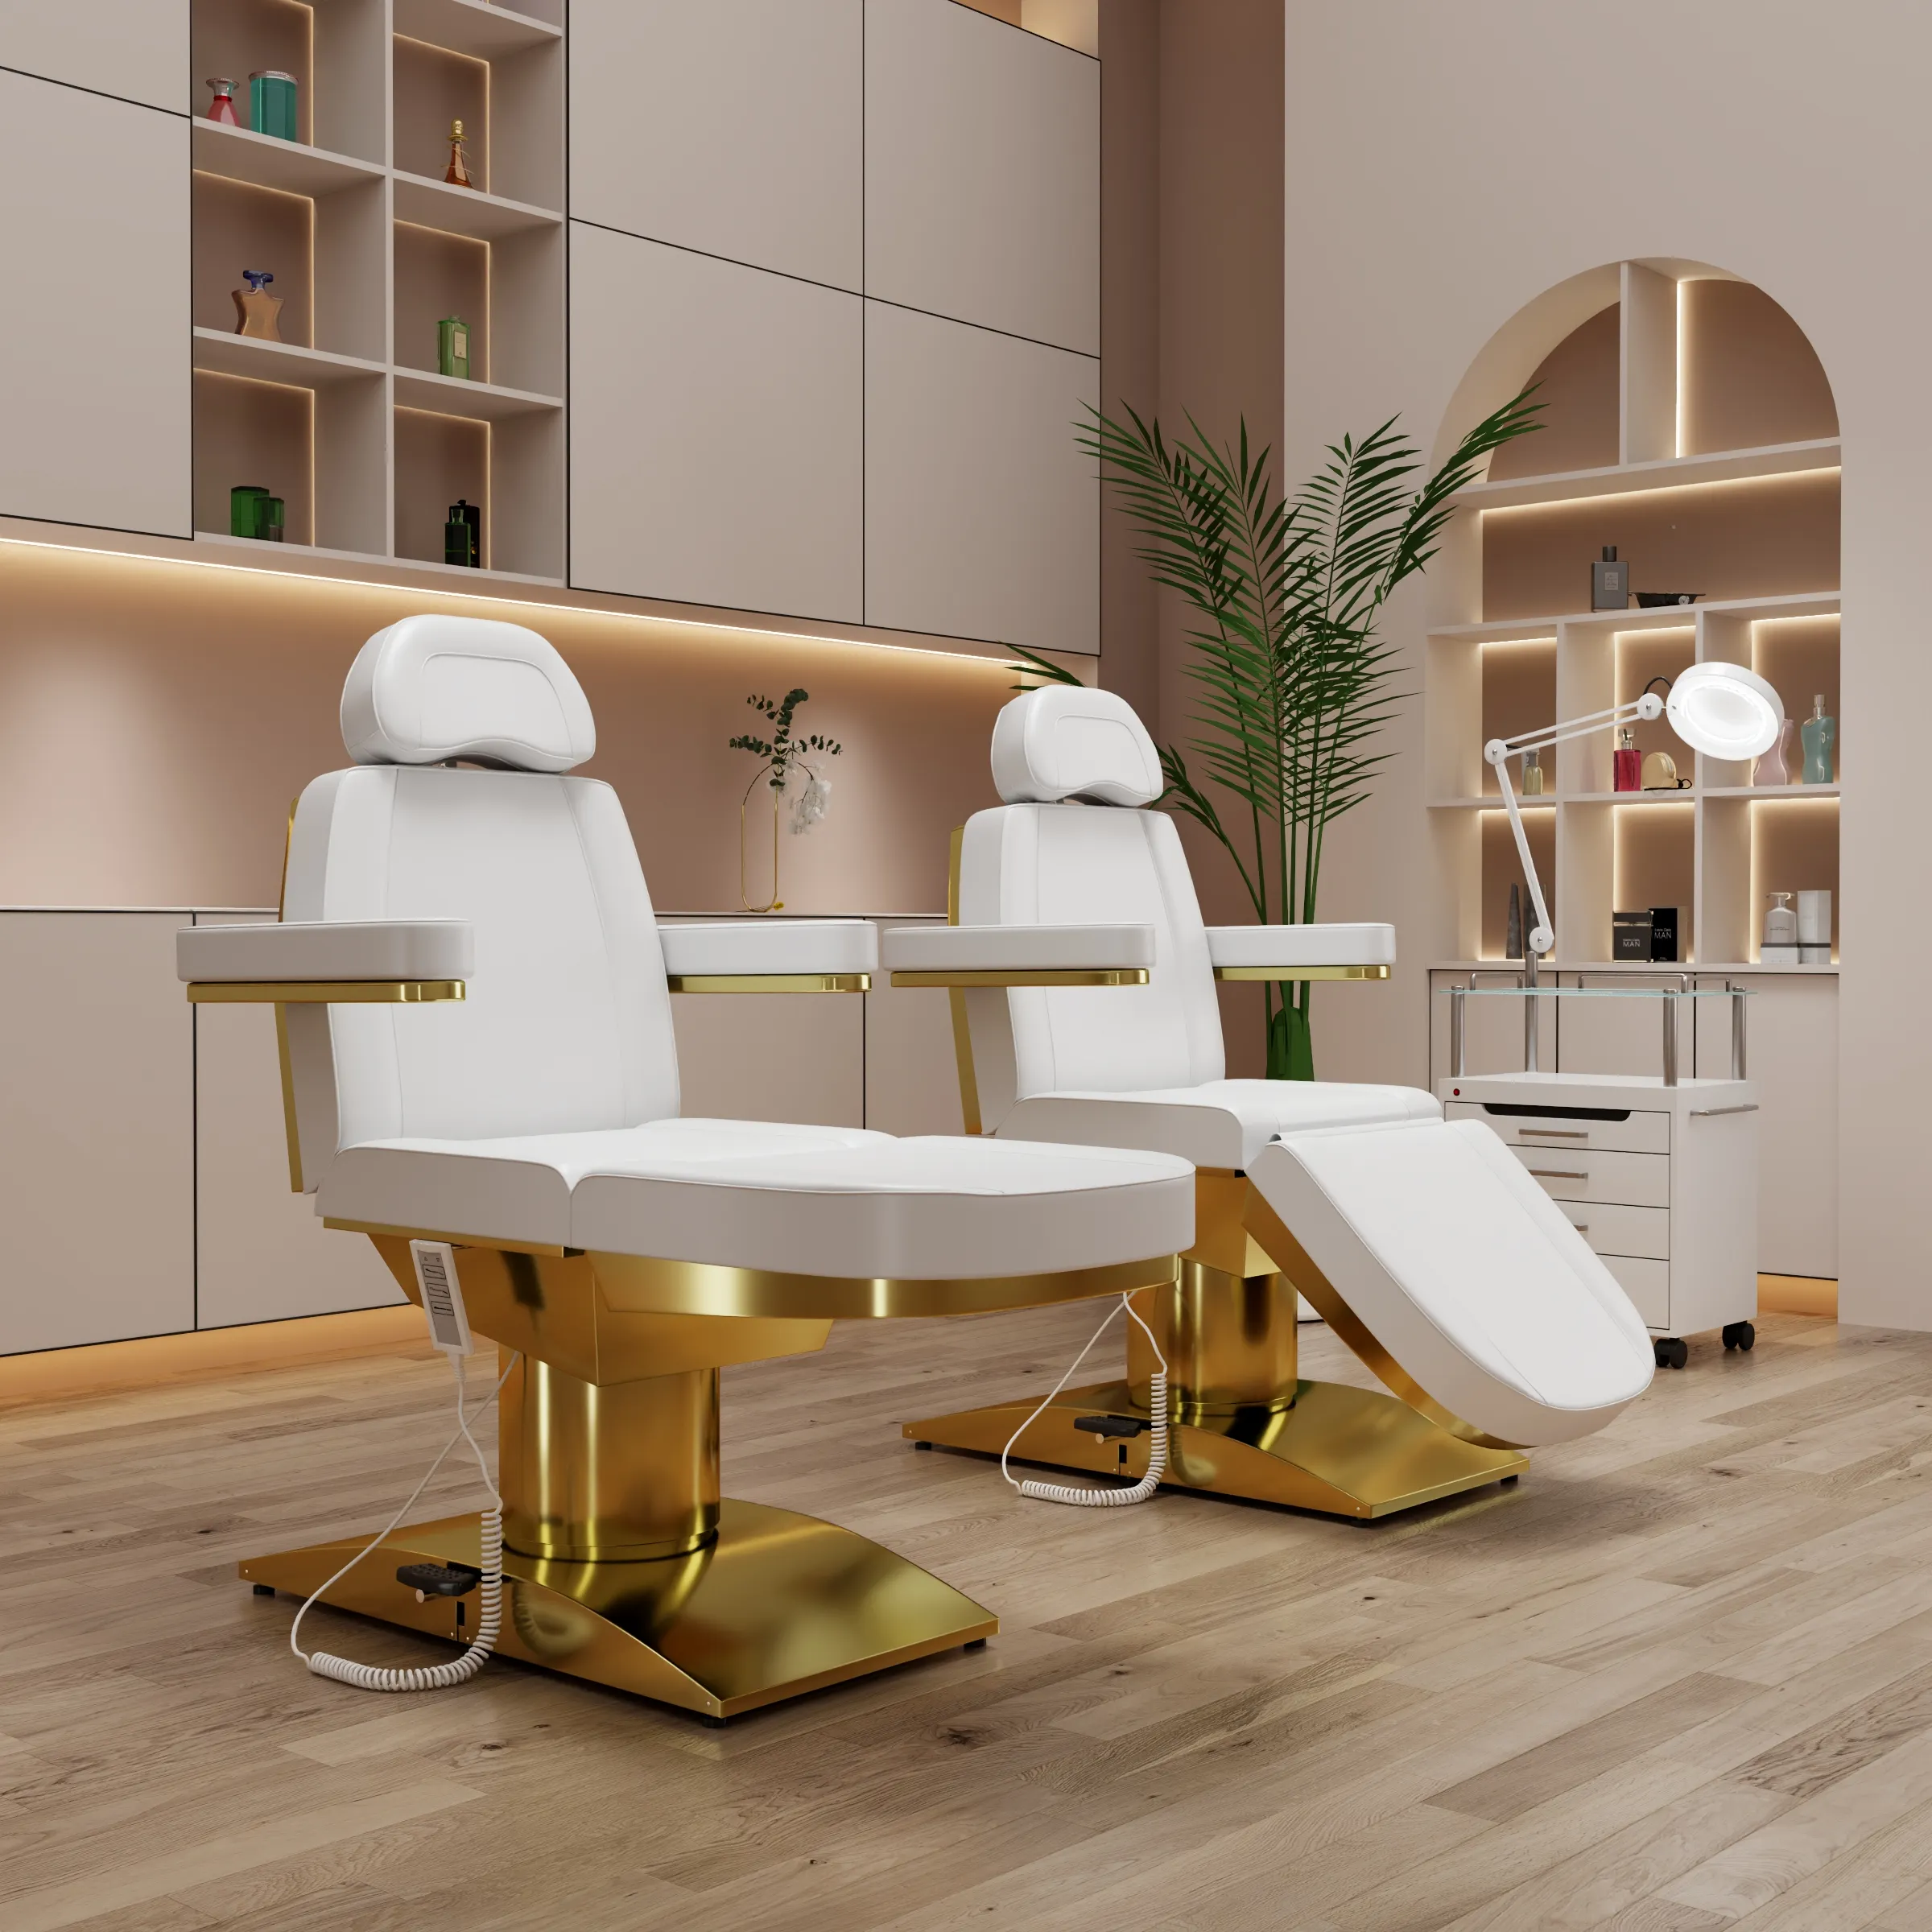 DM New update Salon modern Lash spa Facial chair electric massage Beauty Bed